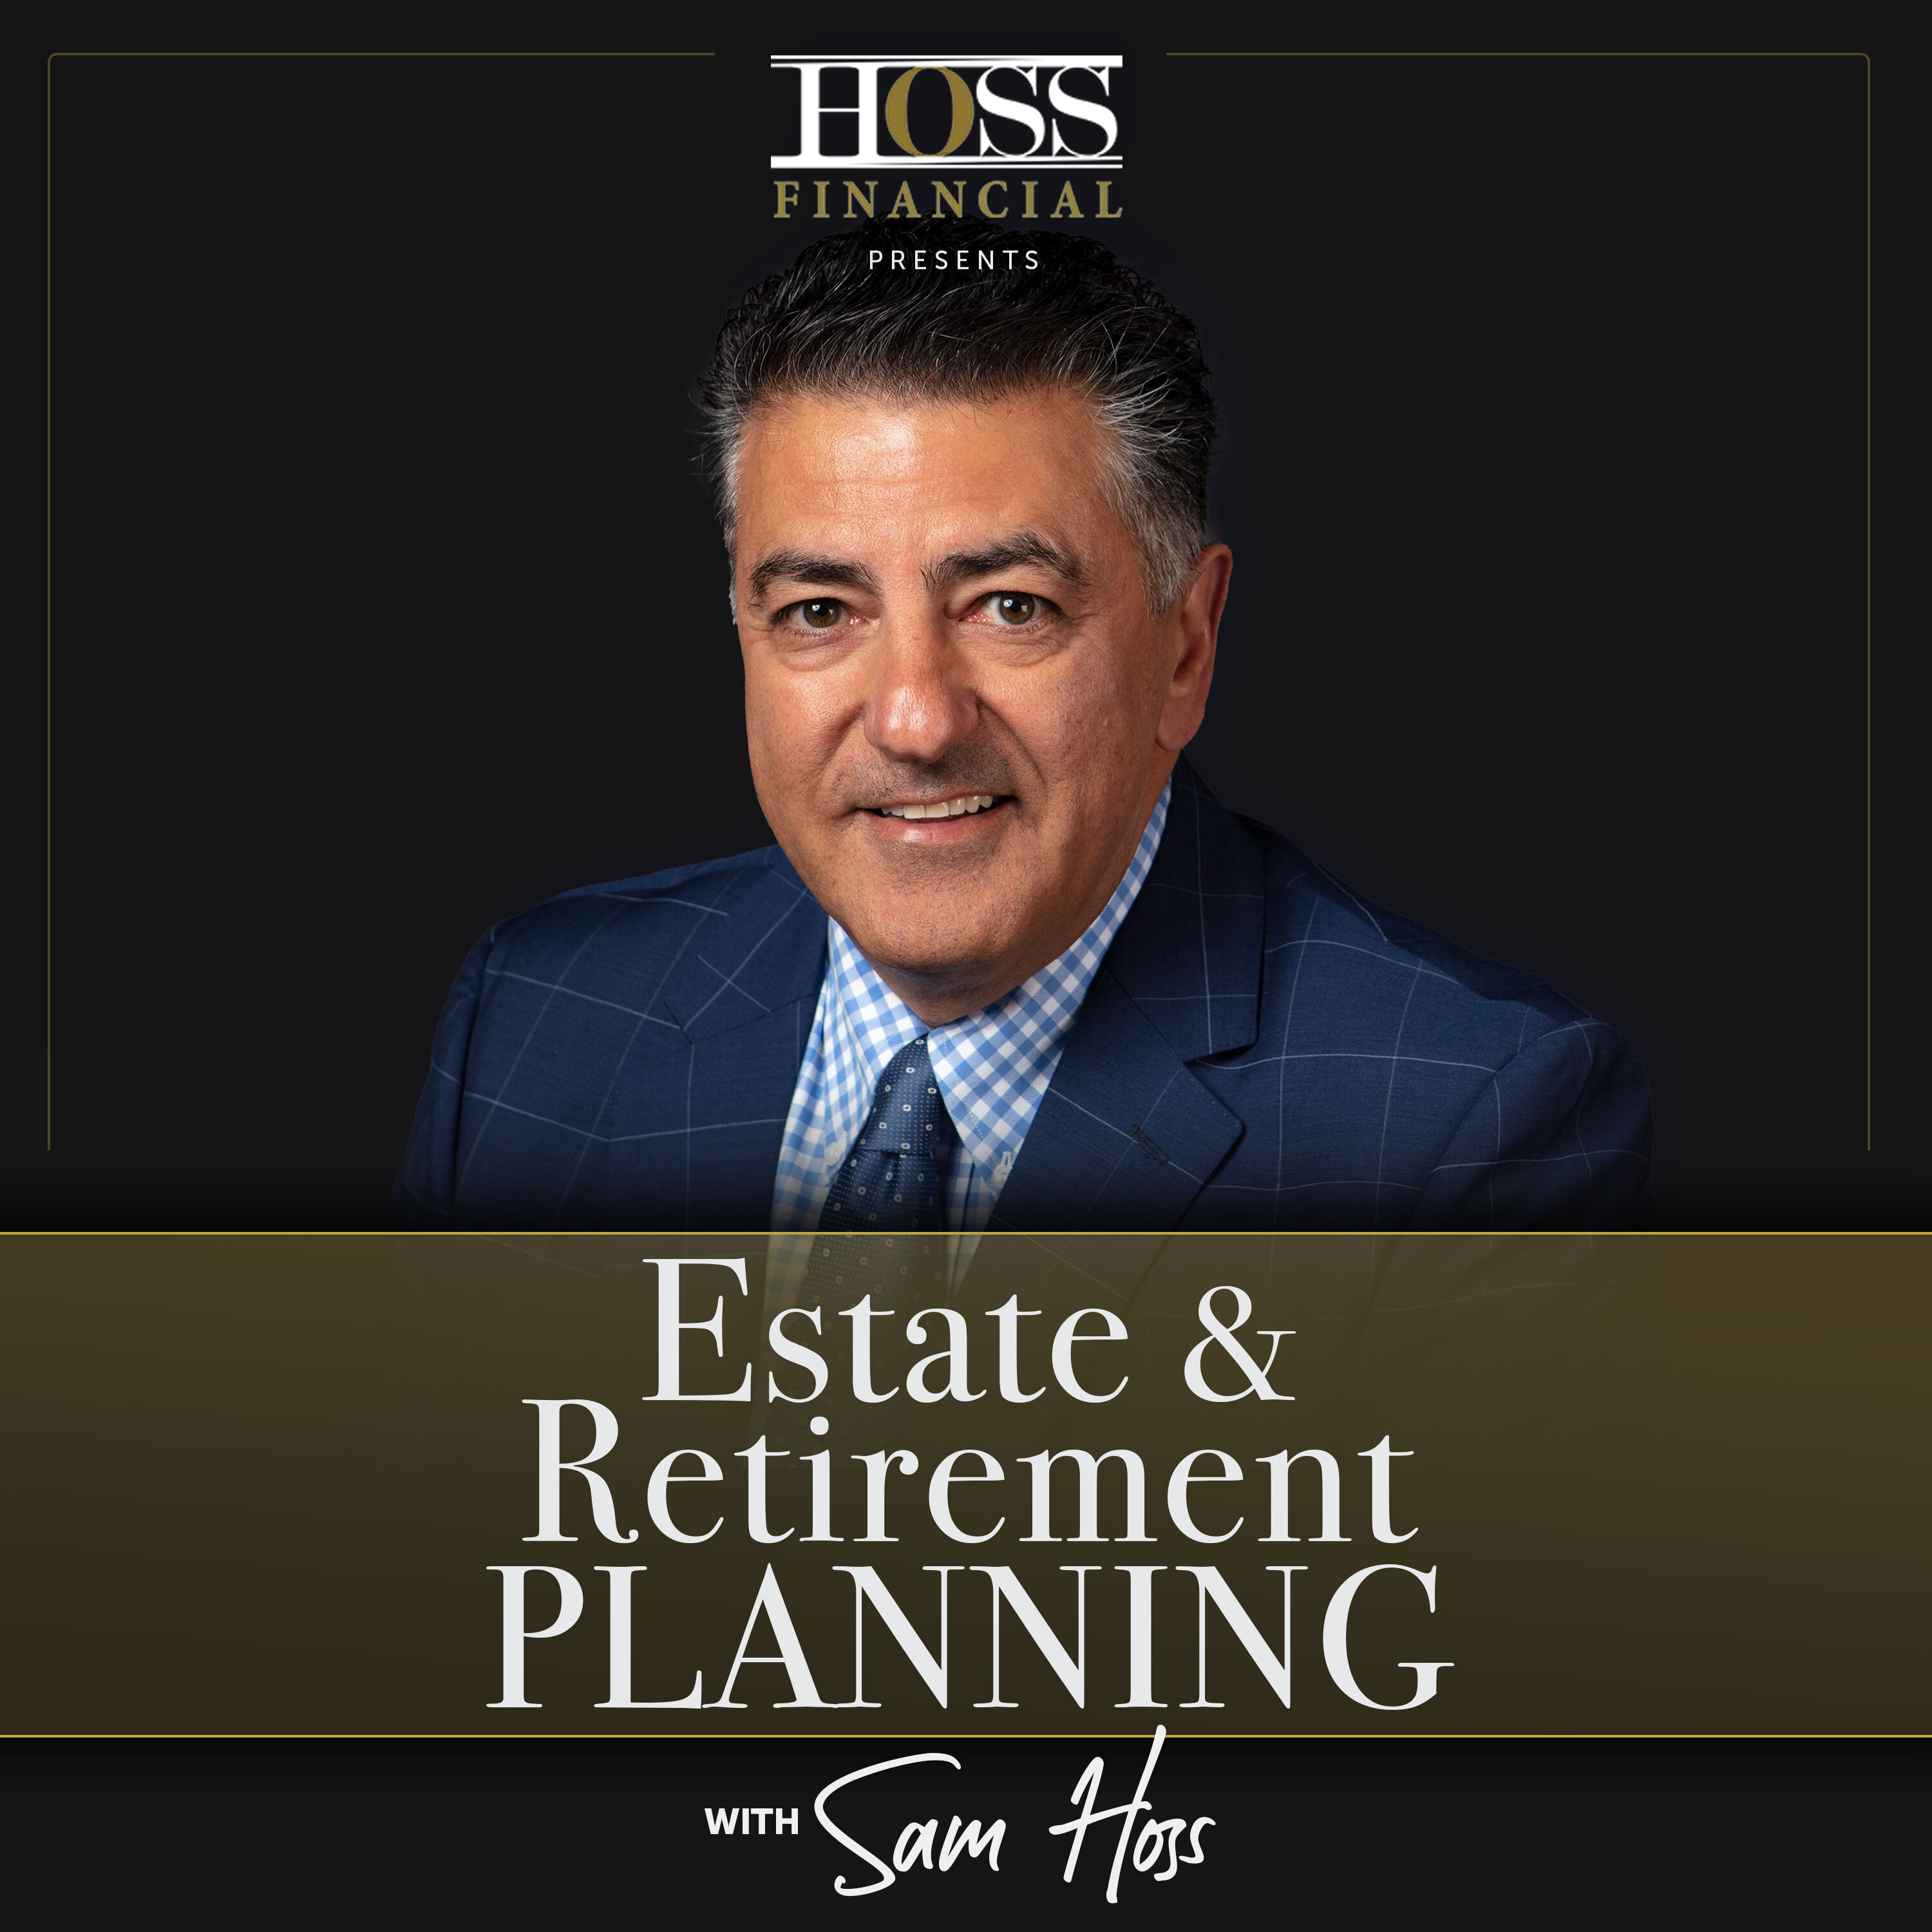 Estate & Retirement Planning with Sam Hoss